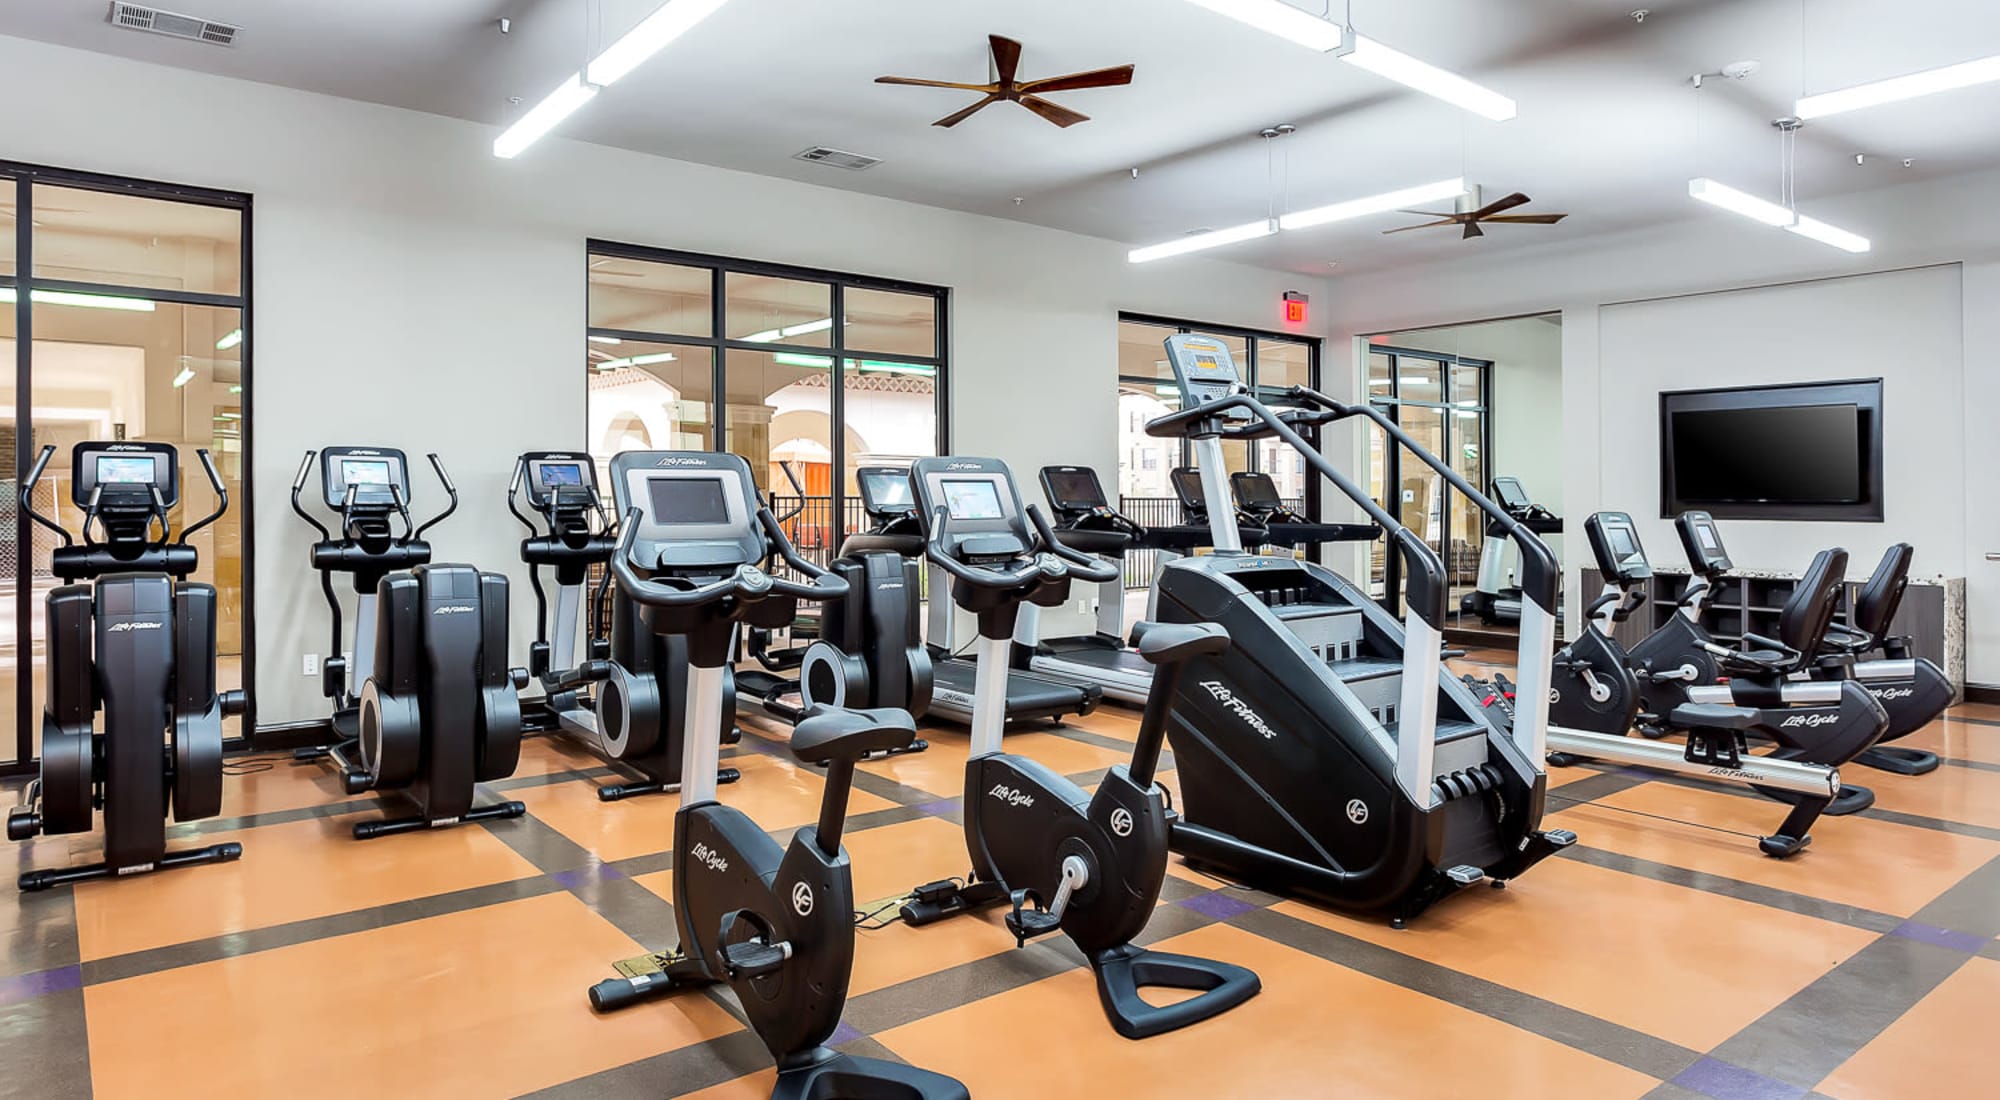 Cardio machines in the fitness area at Villas at the Rim in San Antonio, Texas